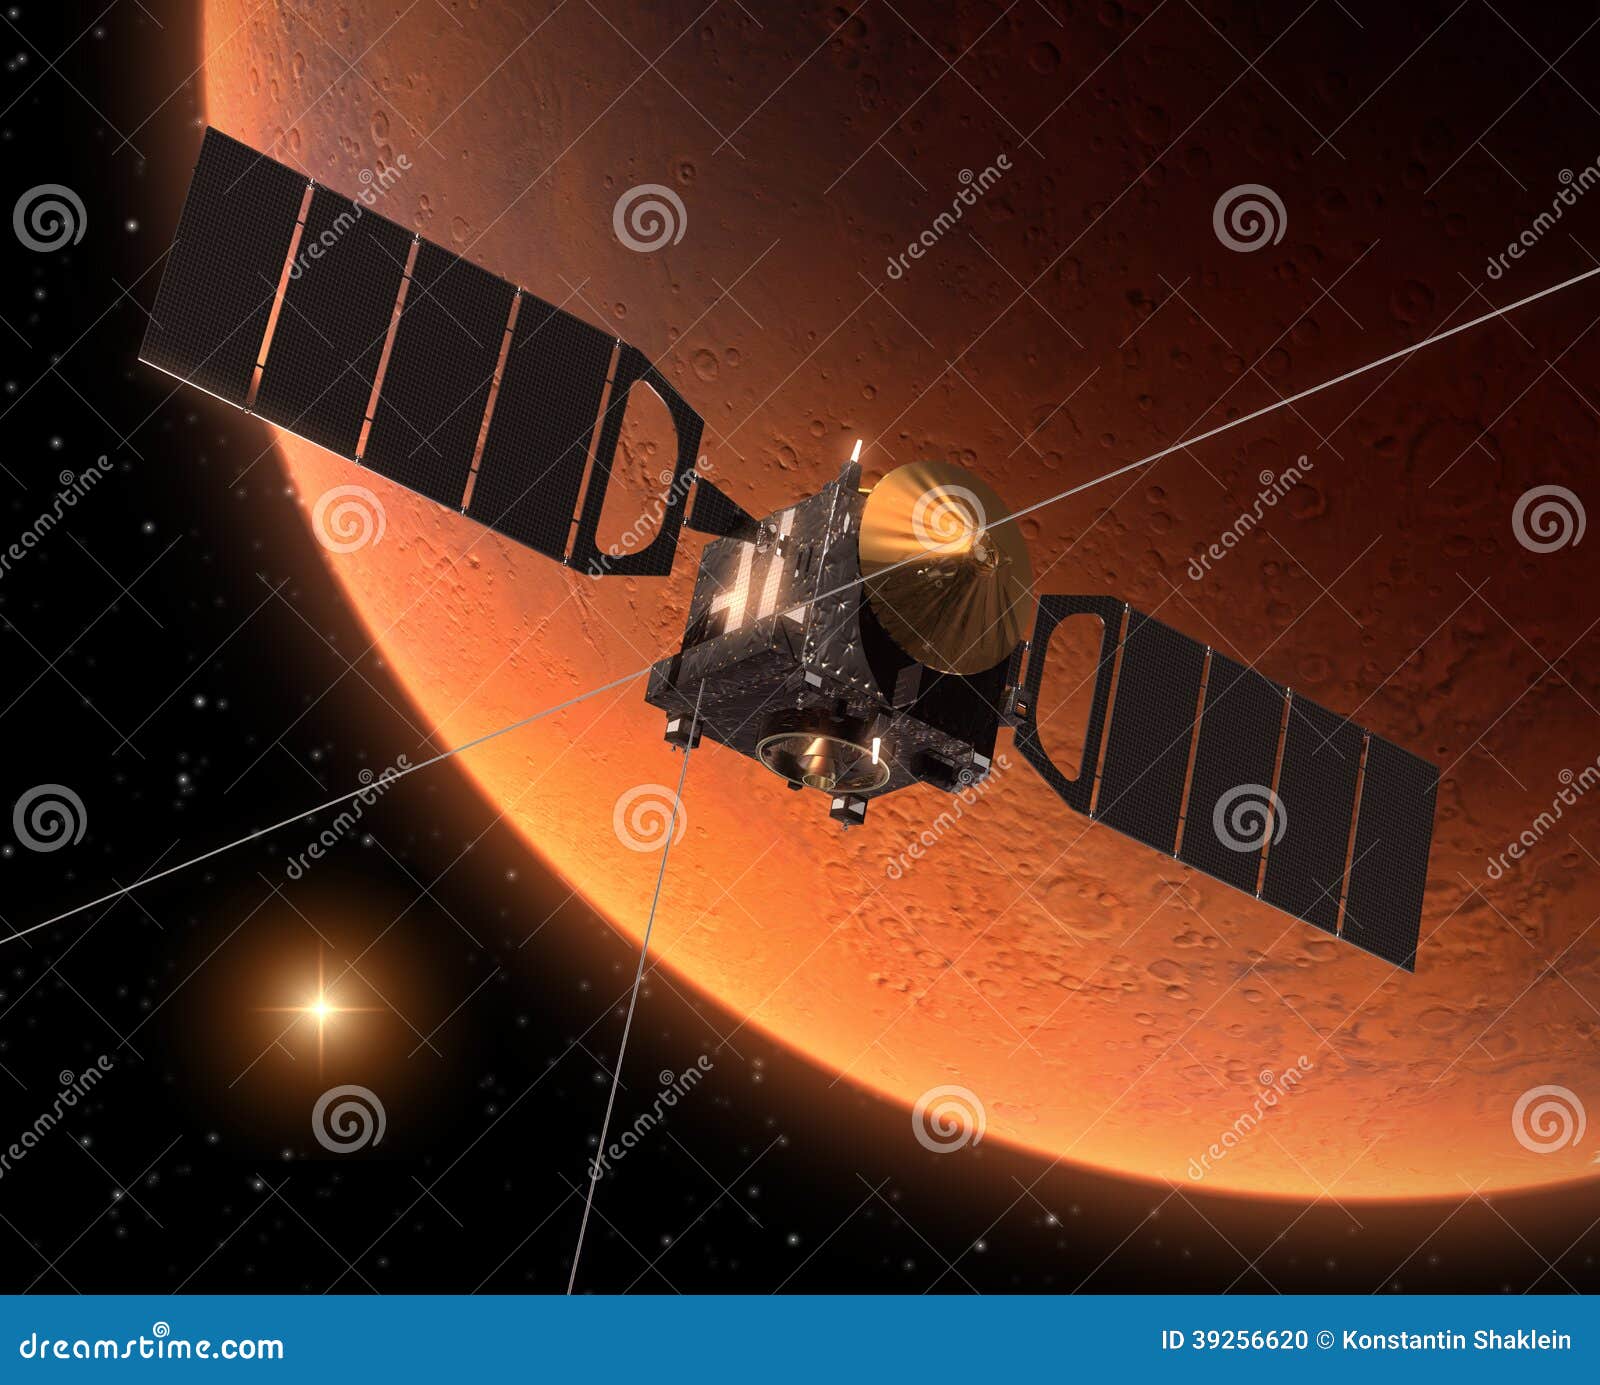 Spacecraft Mars Express Orbiting Mars. Stock Illustration - Illustration of  battery, shuttle: 39256620